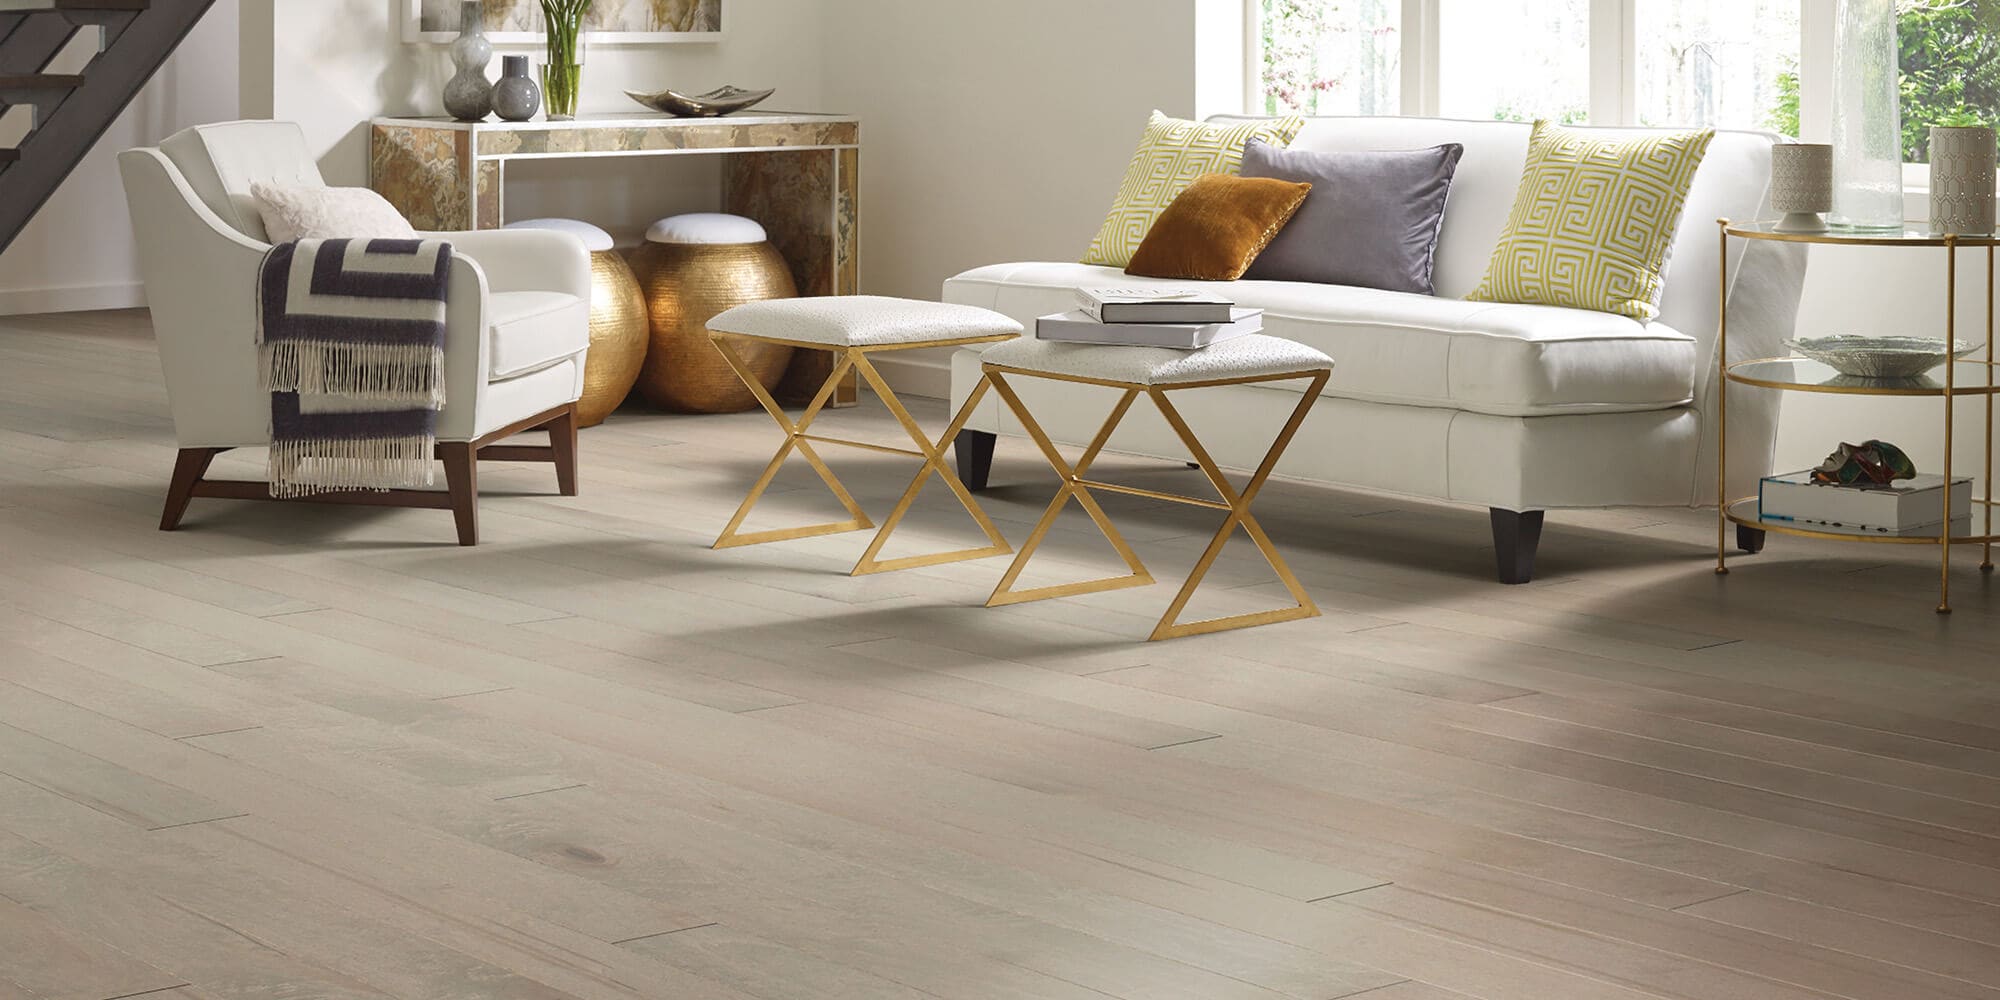 Ocala hardwood flooring in furnished living room area